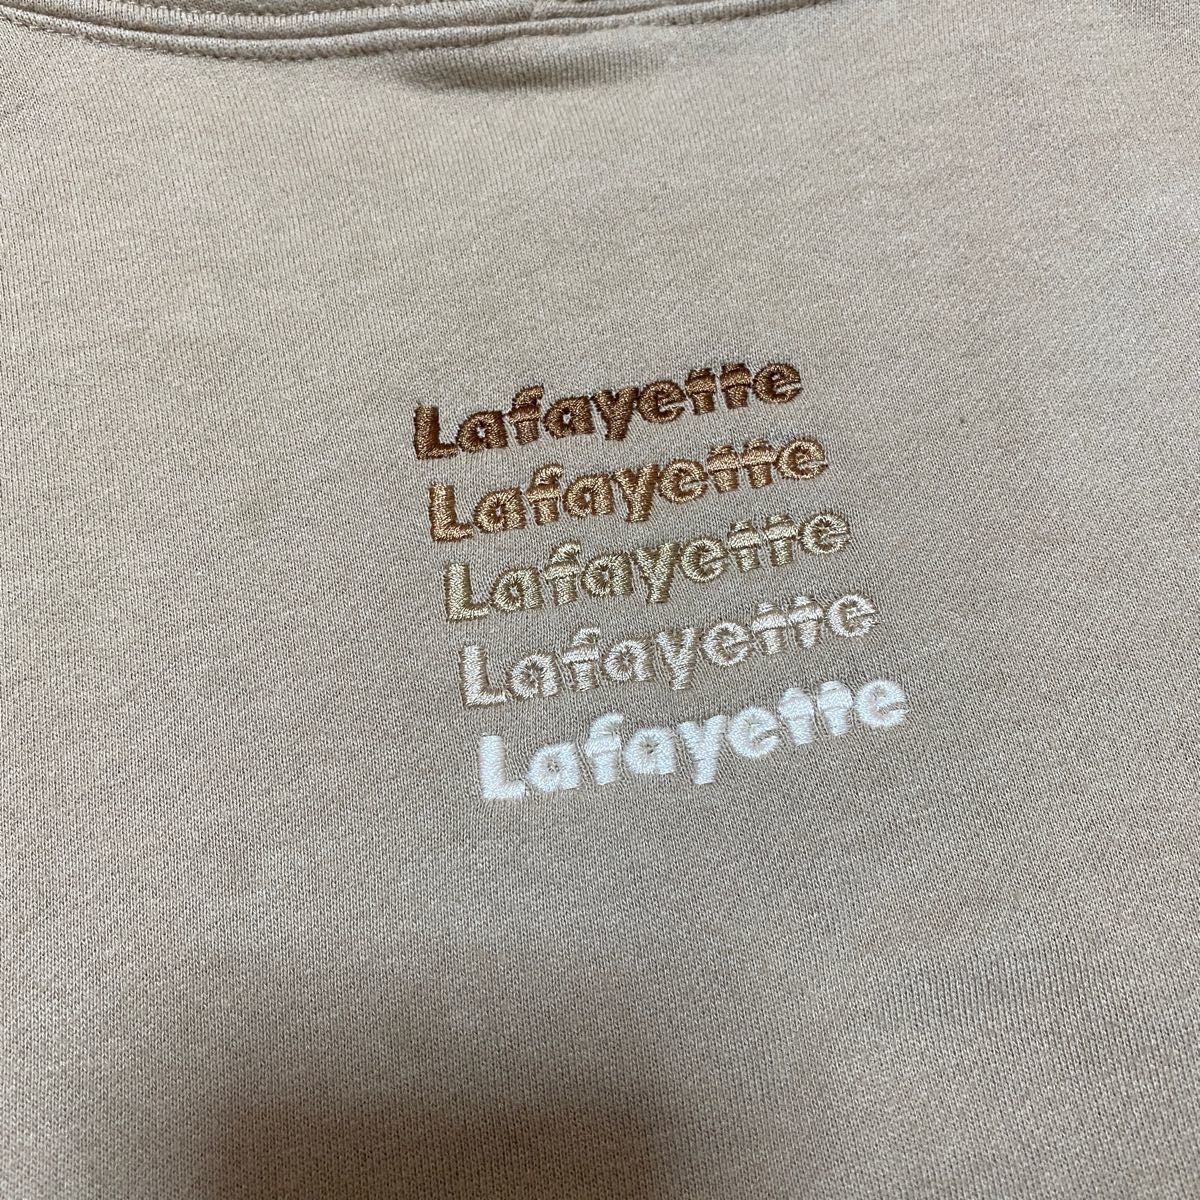 Lafayette パーカー ラファイエット LFYT 裏起毛 メンズ